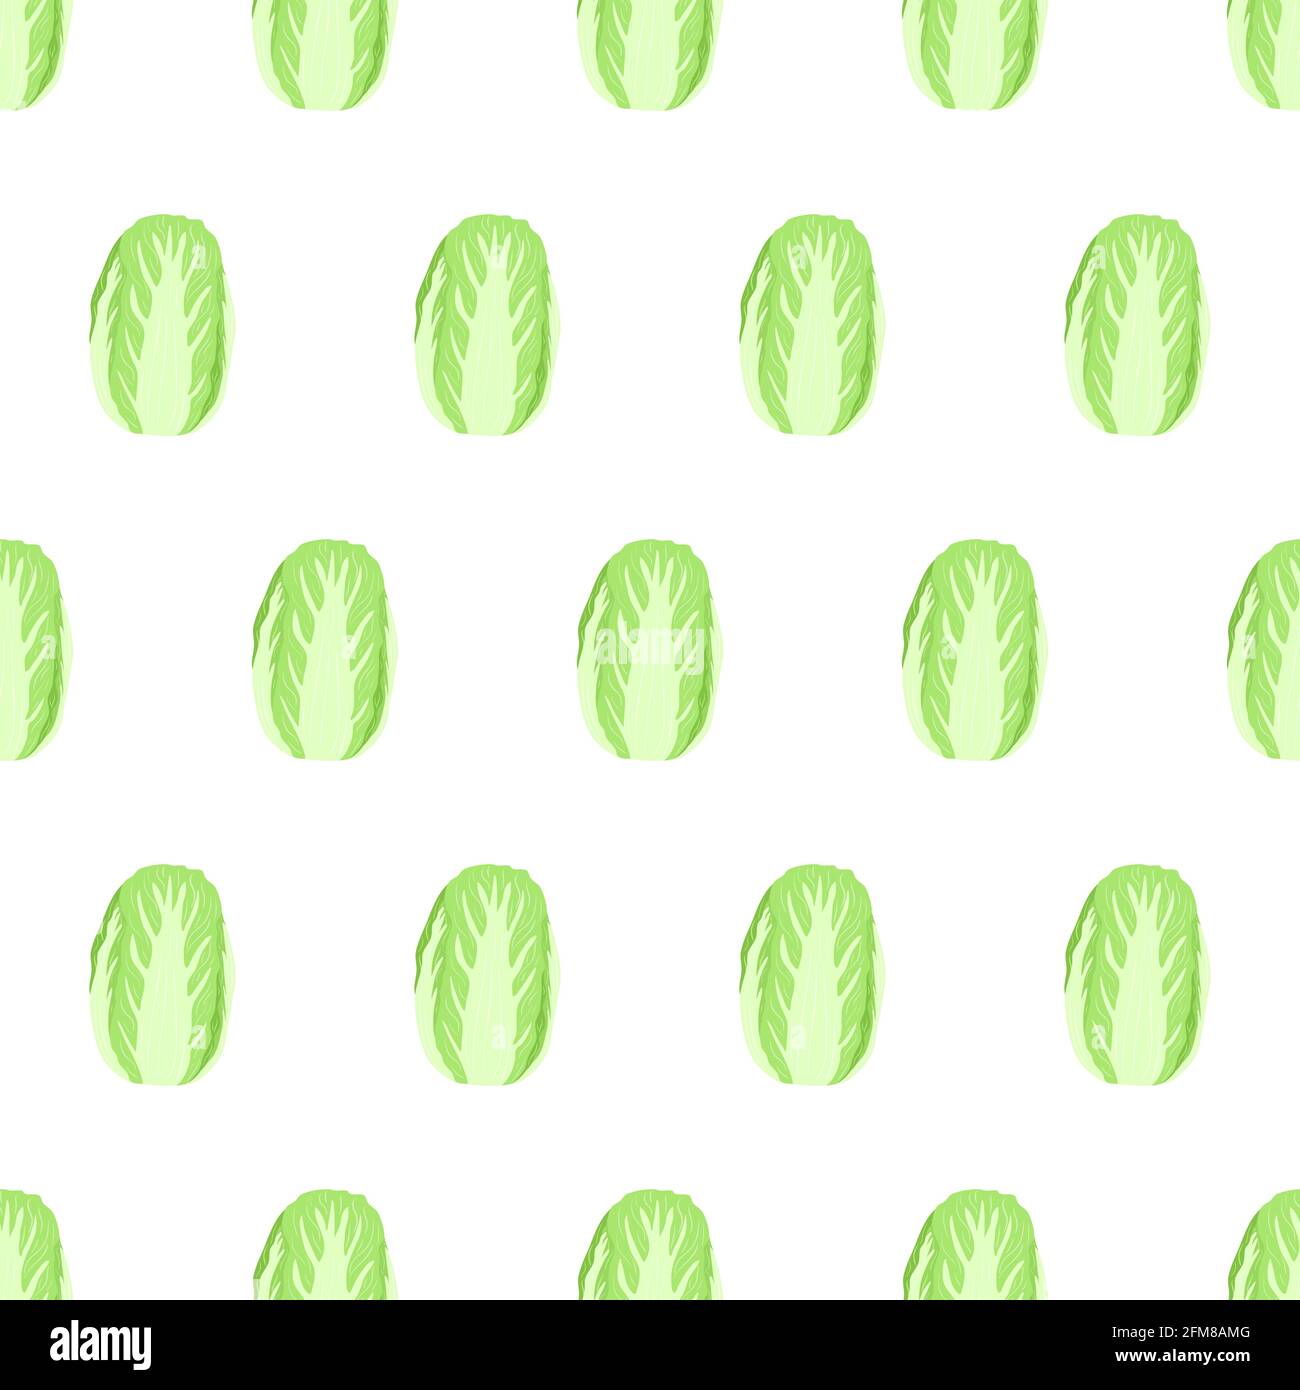 Edible Cabbage Images - Free Download on Freepik